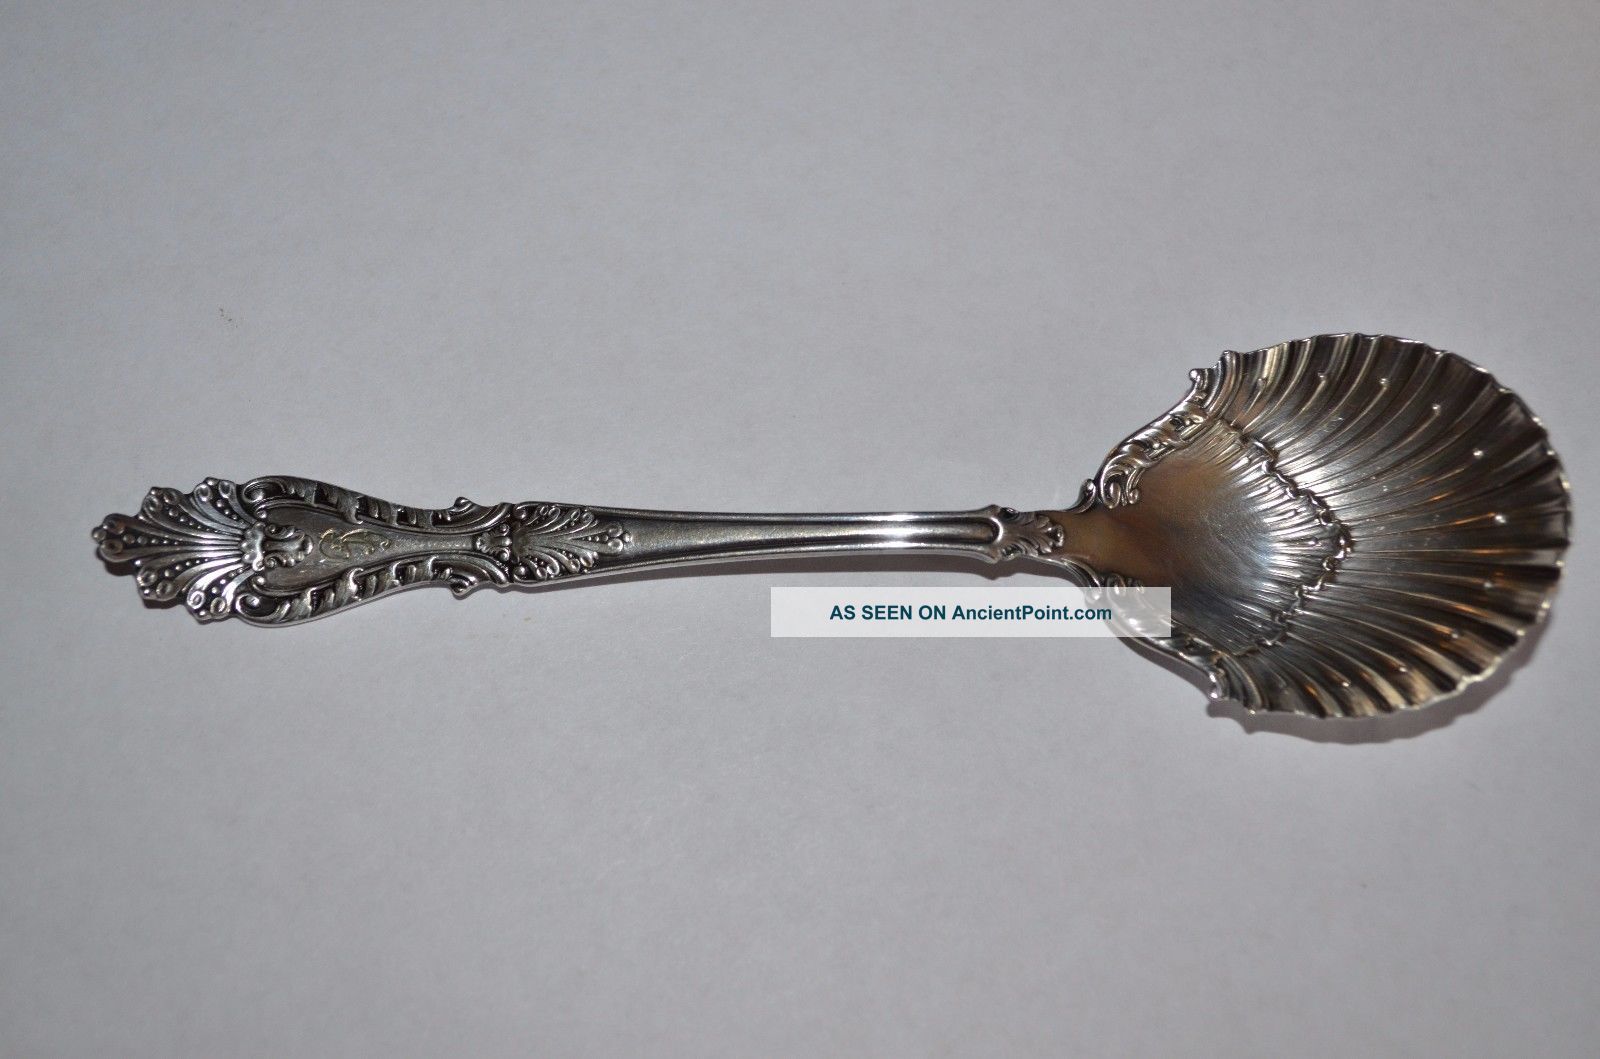 Raphael 1896 Sugar Spoon By Rogers & Hamilton - Extreme Ornate Victorian Flatware & Silverware photo